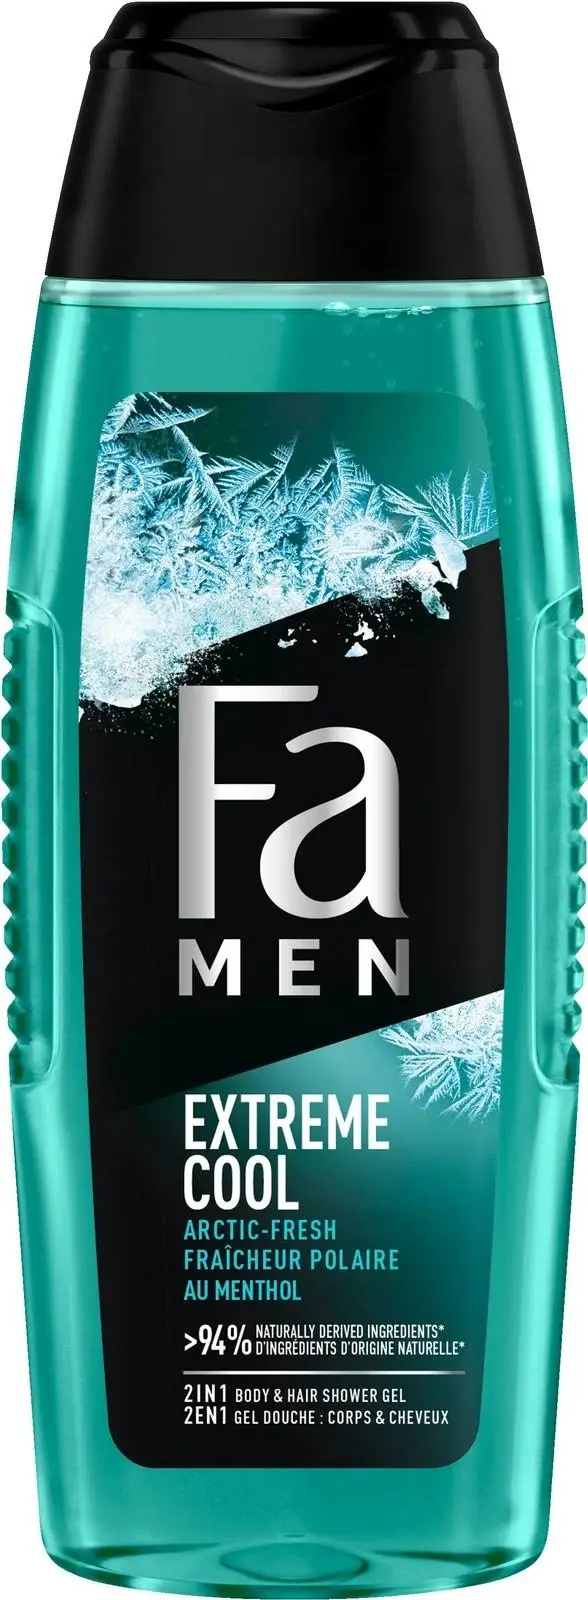 Fa Men Douche Extra Cool (250 ml)